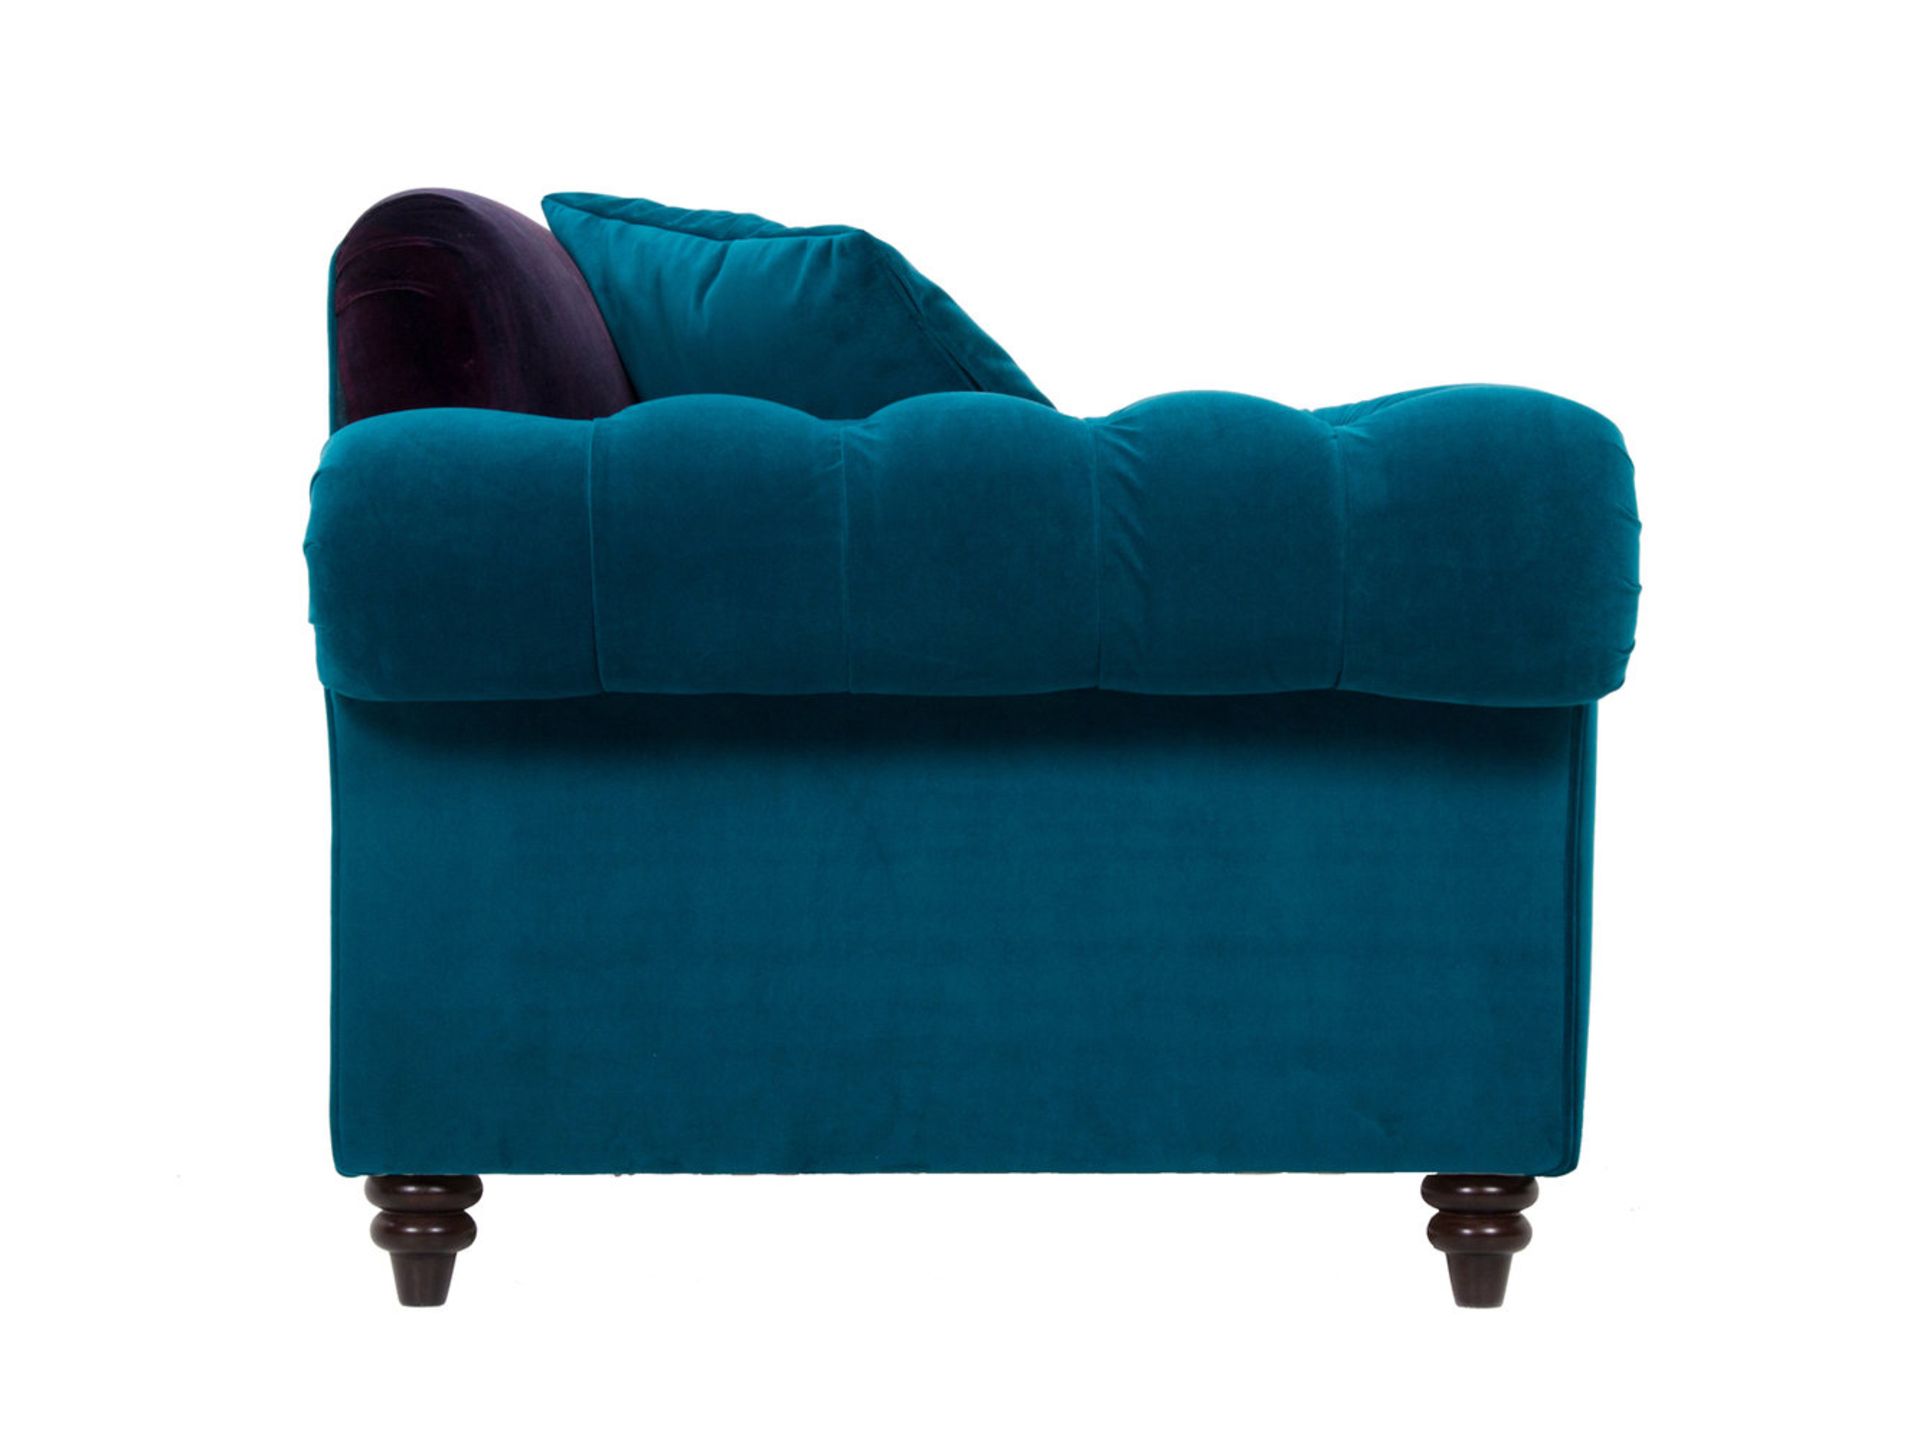 1 x Lytton Mallard Sofa Upholstered in Harlequin Velvet Fabric - RRP £1,259! - Bild 6 aus 7